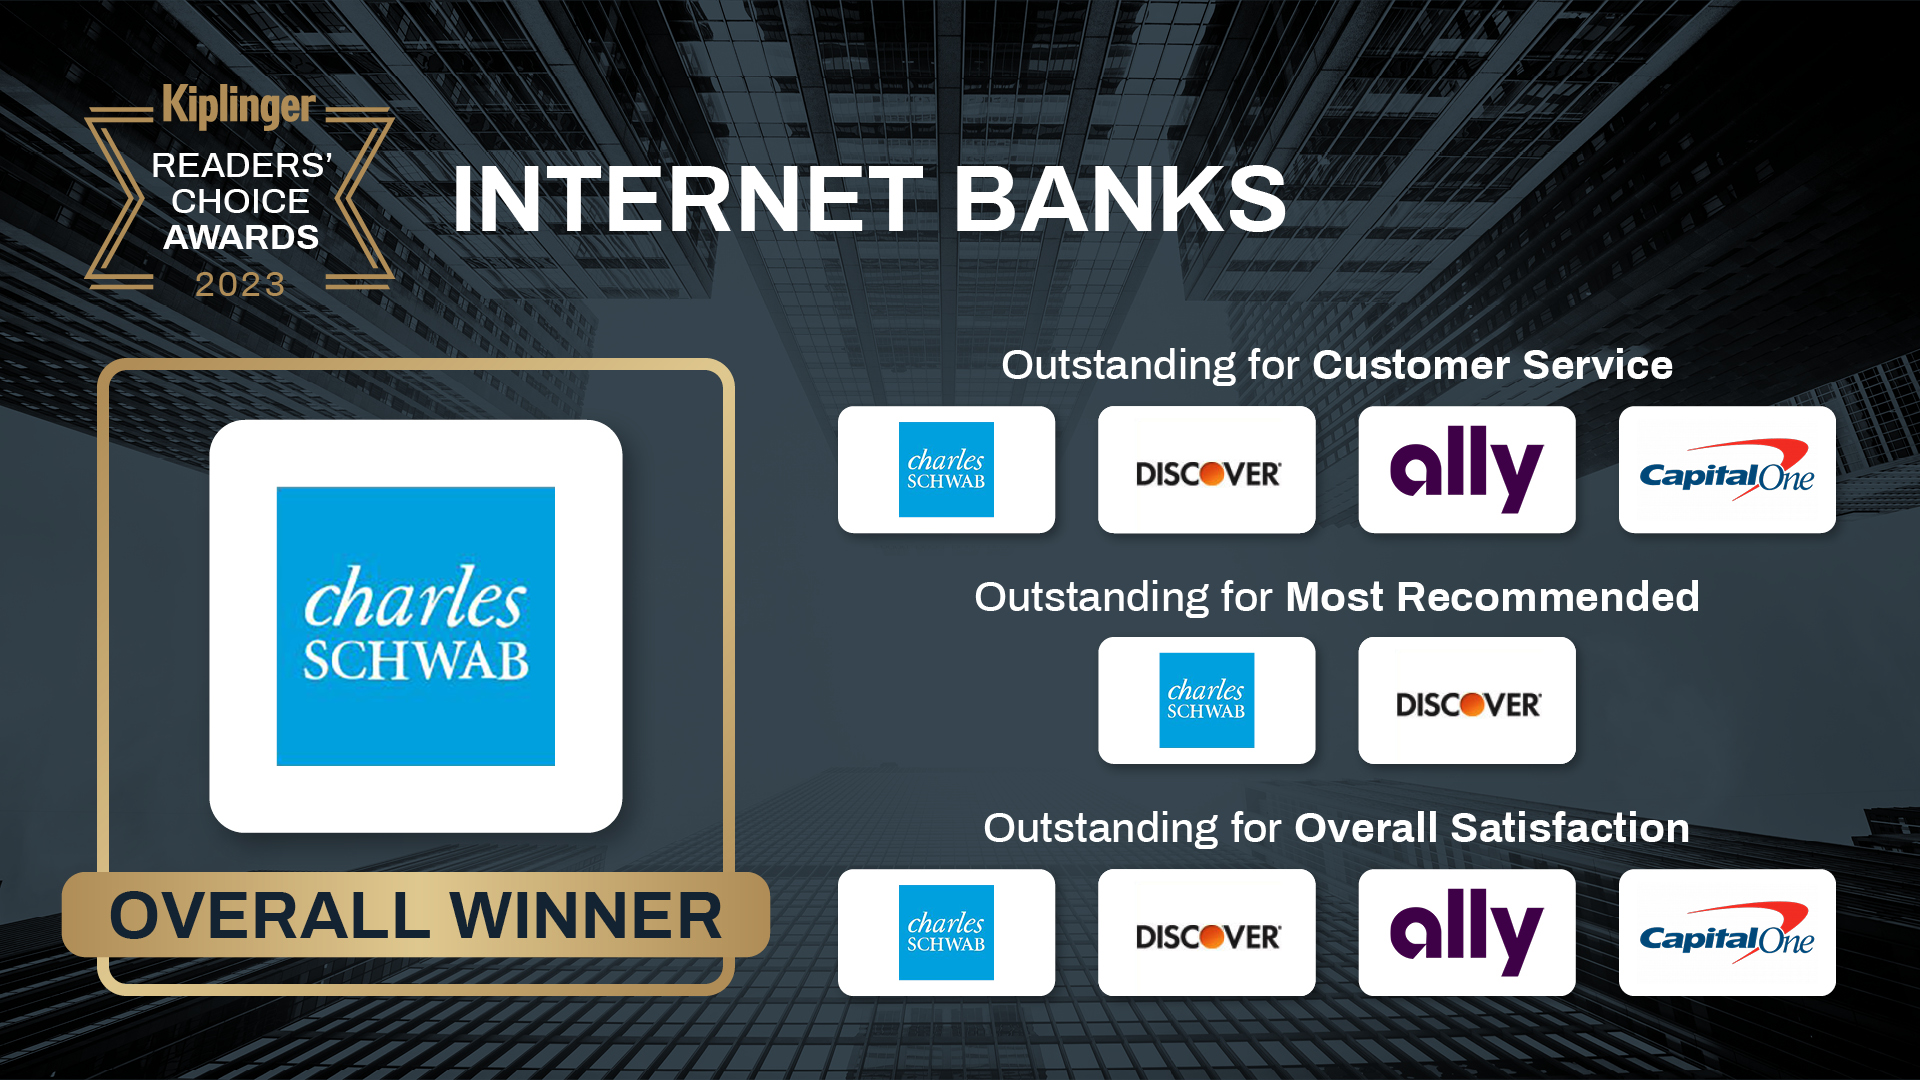 Kiplinger Readers' Choice Awards: Internet Banks